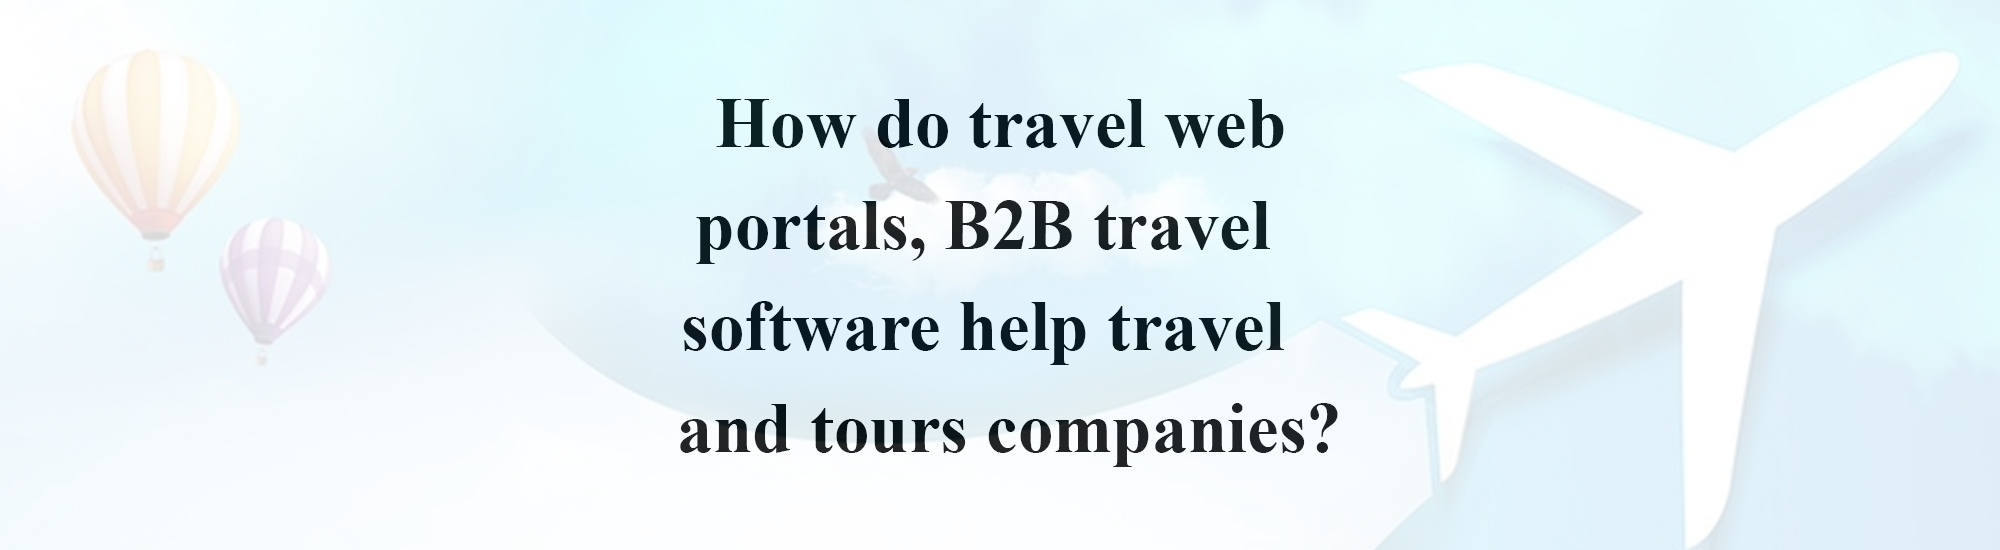 b2b travel software